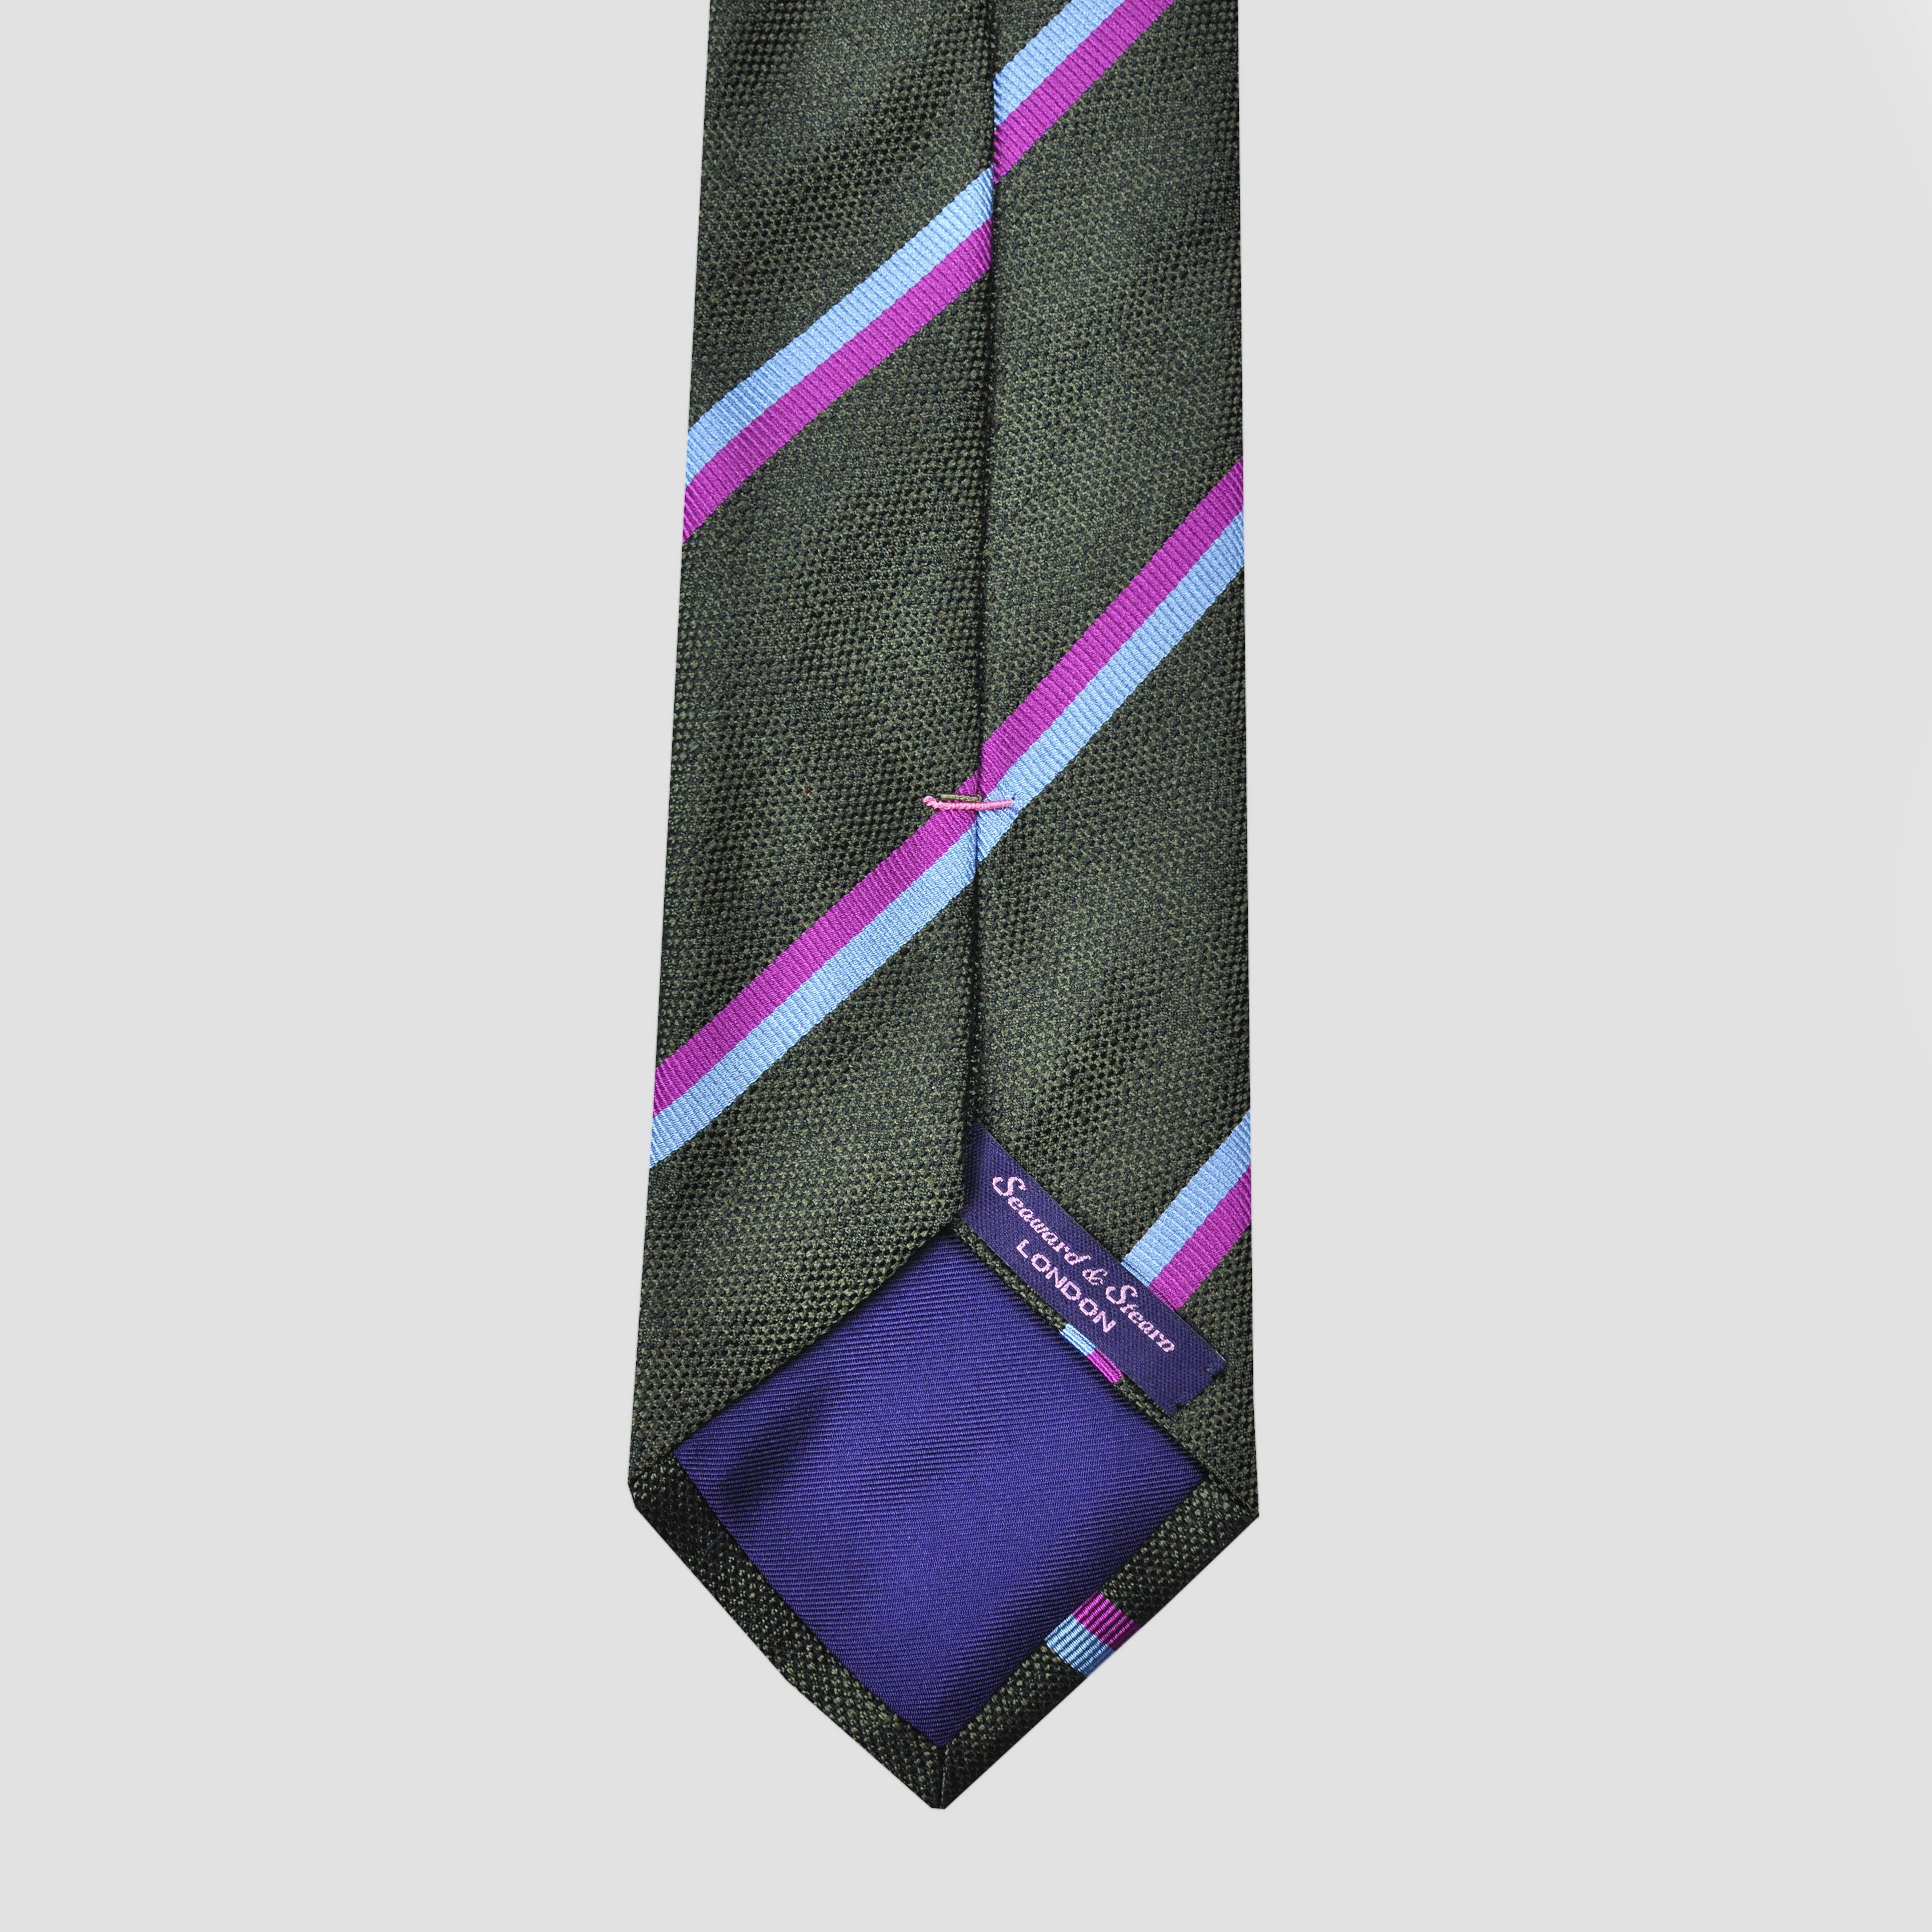 Neat Stripes Tussah Silk Tie in Brown, Blue & Pink